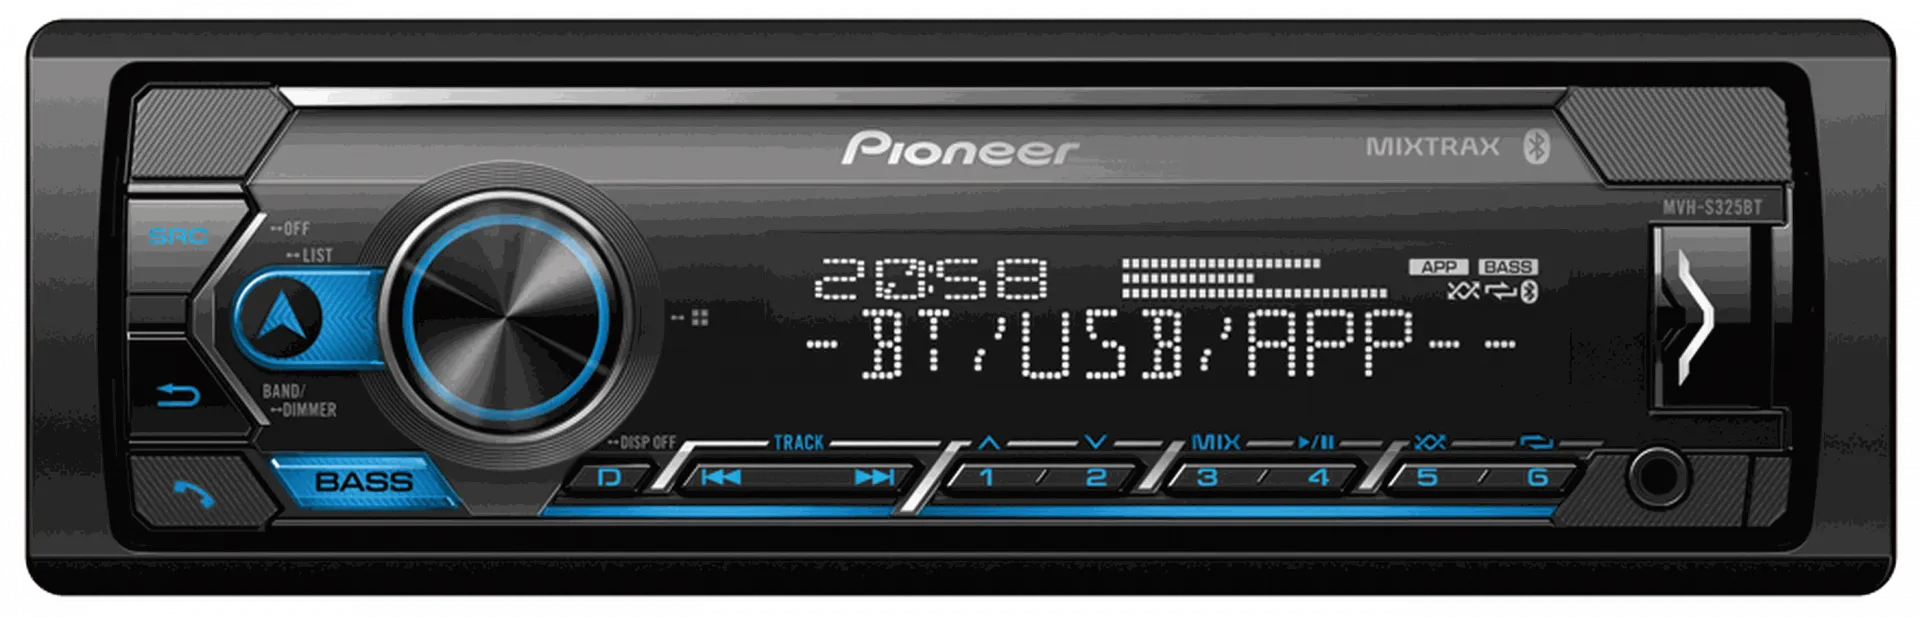 Автомагнитола Pioneer MVH-S325BT с технологией BLUETOOTH#1